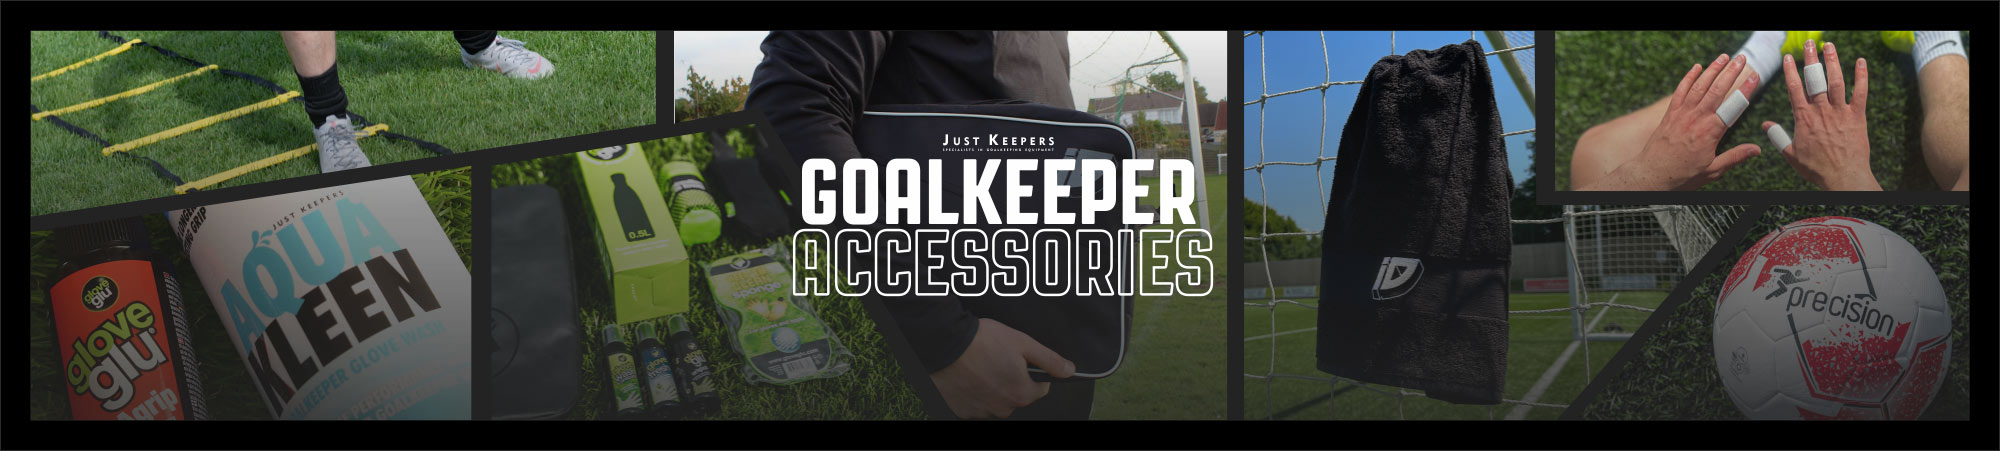 Just Keepers Goalkeeper accessories